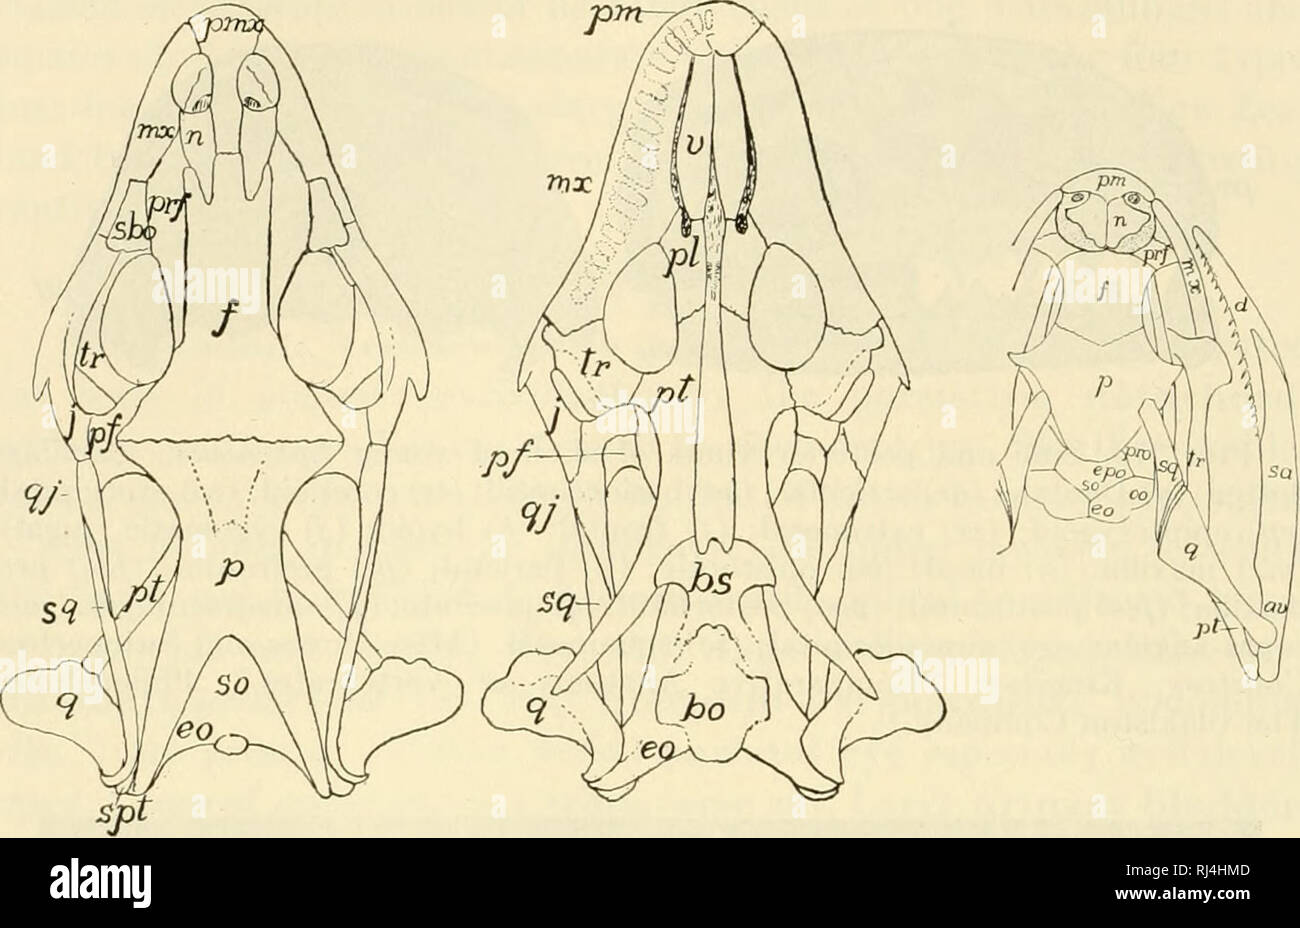 . The chordates. Chordata. 486 Comparative Morphology of Chordates. Fig. 375. {Left and Center) Skull of a lizard (Gerrhontus imbricatus). (After Siebenrock.) (Right) Skull of snake, Tropidonotus. (After Parker.) (av) articular; (bo) basioccipital; (bs) basisphenoid; (d) dentale; (eo) exoccipital; (epo) epiotic; (/) frontal; (j) jugal; (mi) maxilla; (n) nasal; (oo) opistbotic; (p) parietal; (pf) postfrontal; (pi) palatine; (pm, pmx) premaxilla; (prf) prefrontal; (pro) prootic; (pt) pterygoid; (a) quadrate; (qj) quadratojugal; (sa) supra-angular; (sbo) subocular; (so) supraoccipital; (spt) supr Stock Photo